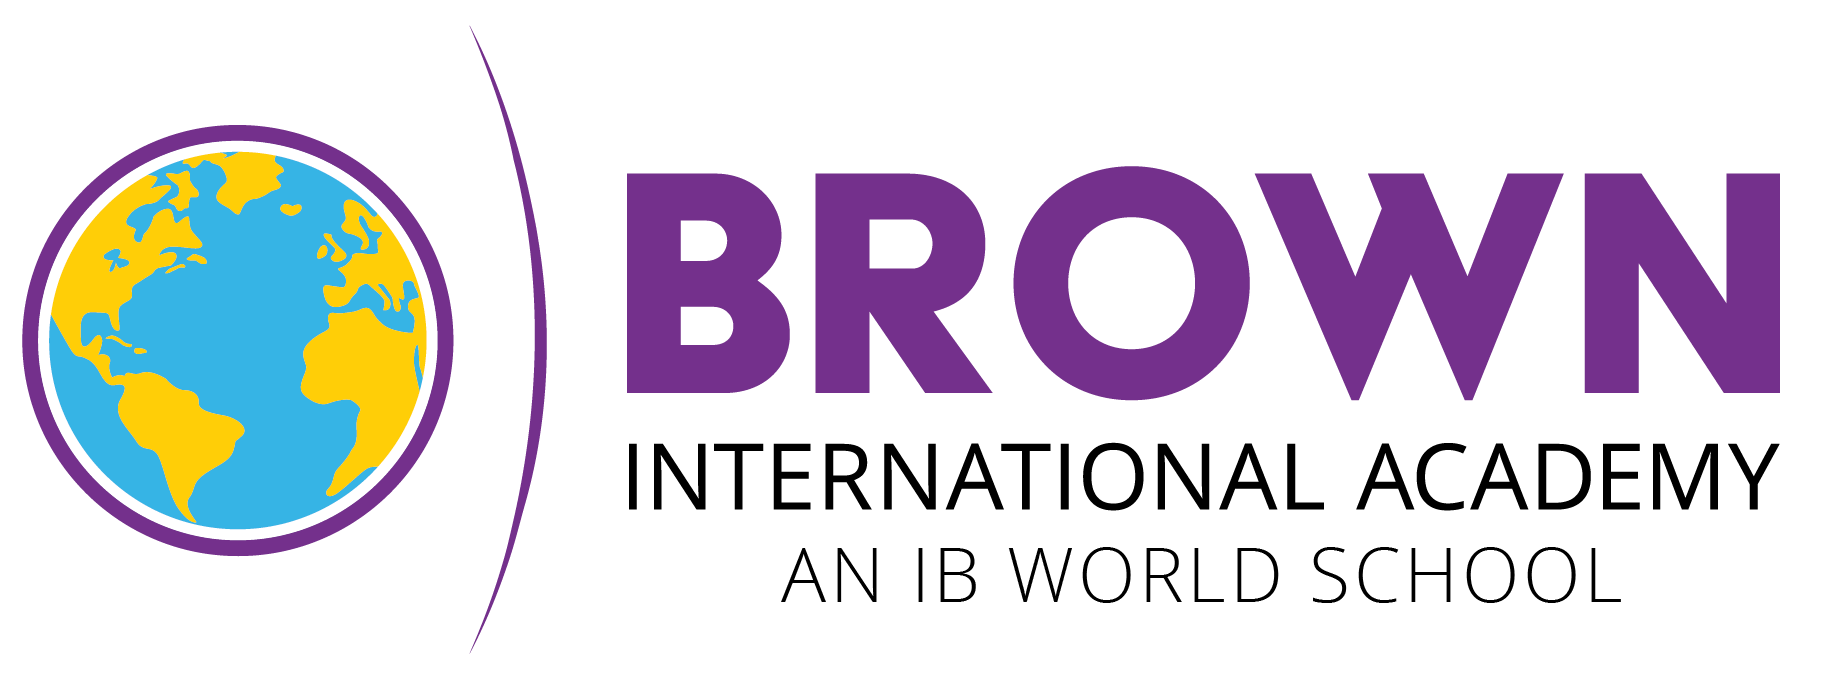 Brown International Academy horizontal color logo